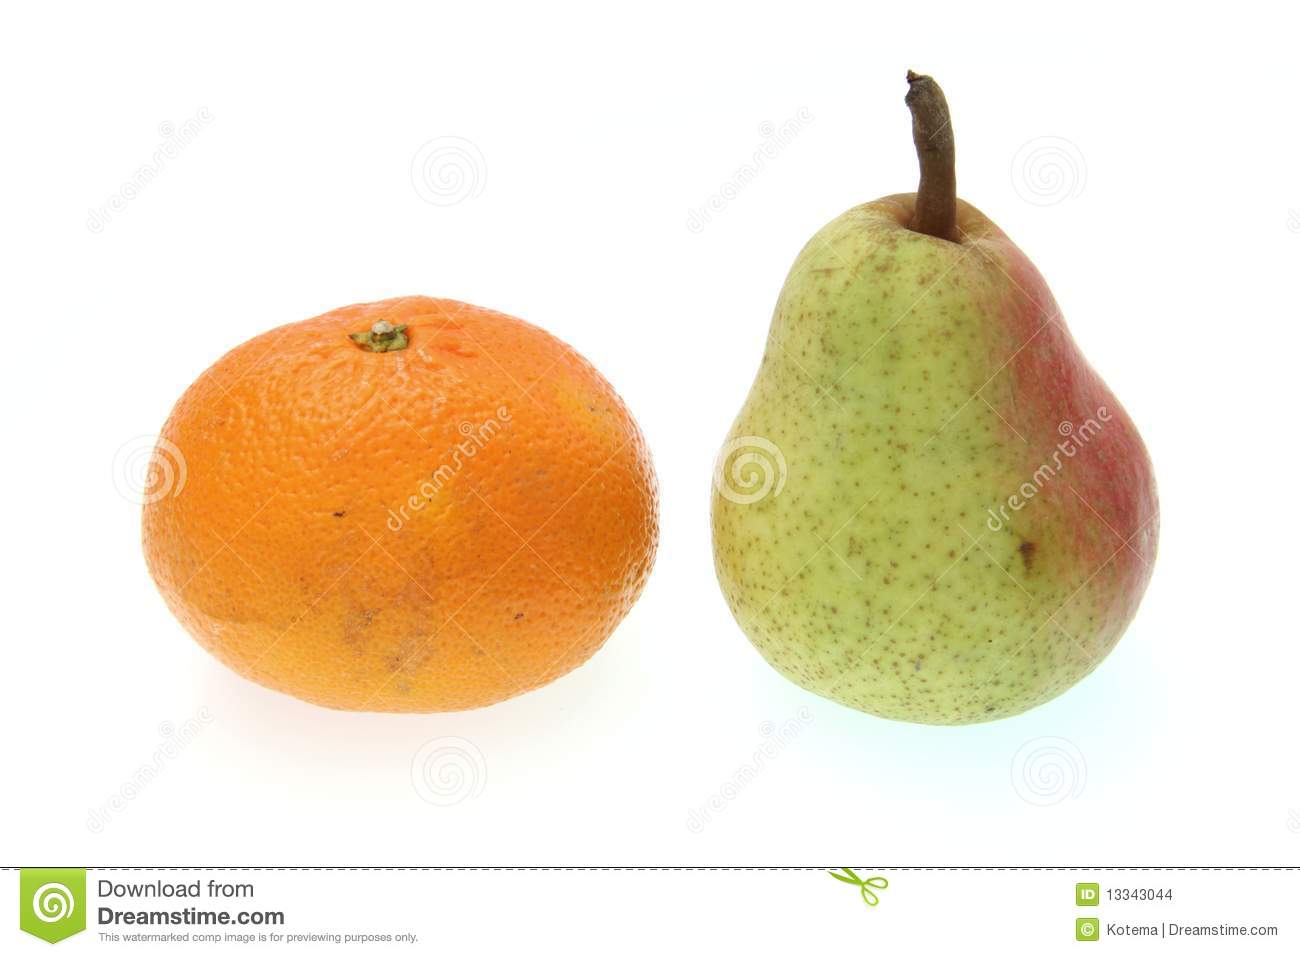 pear and orange.jpg